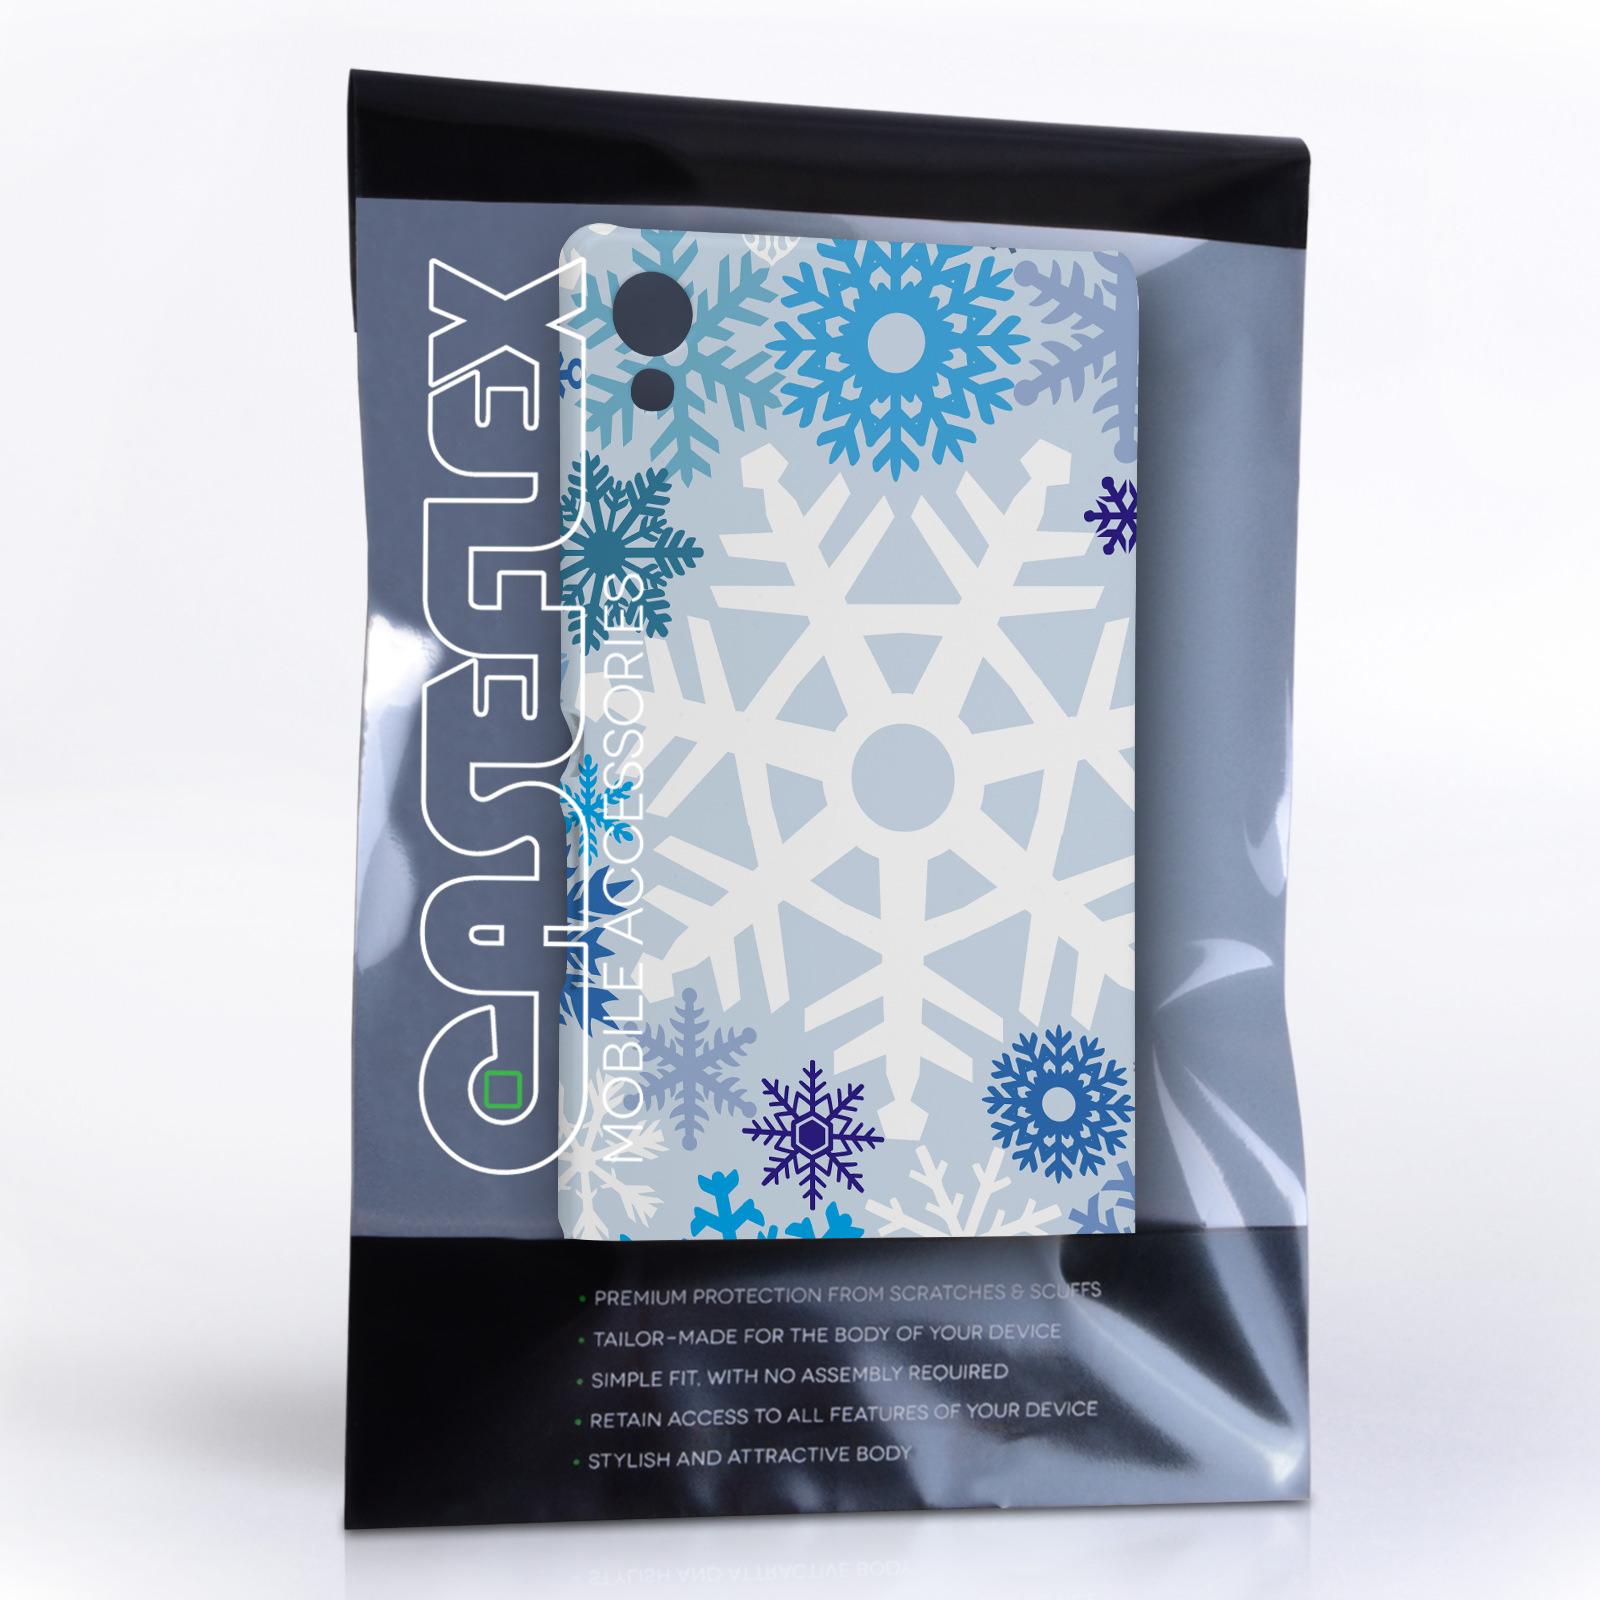 Caseflex Sony Xperia Z3+ Winter Christmas Snowflake Hard Case - White / Blue